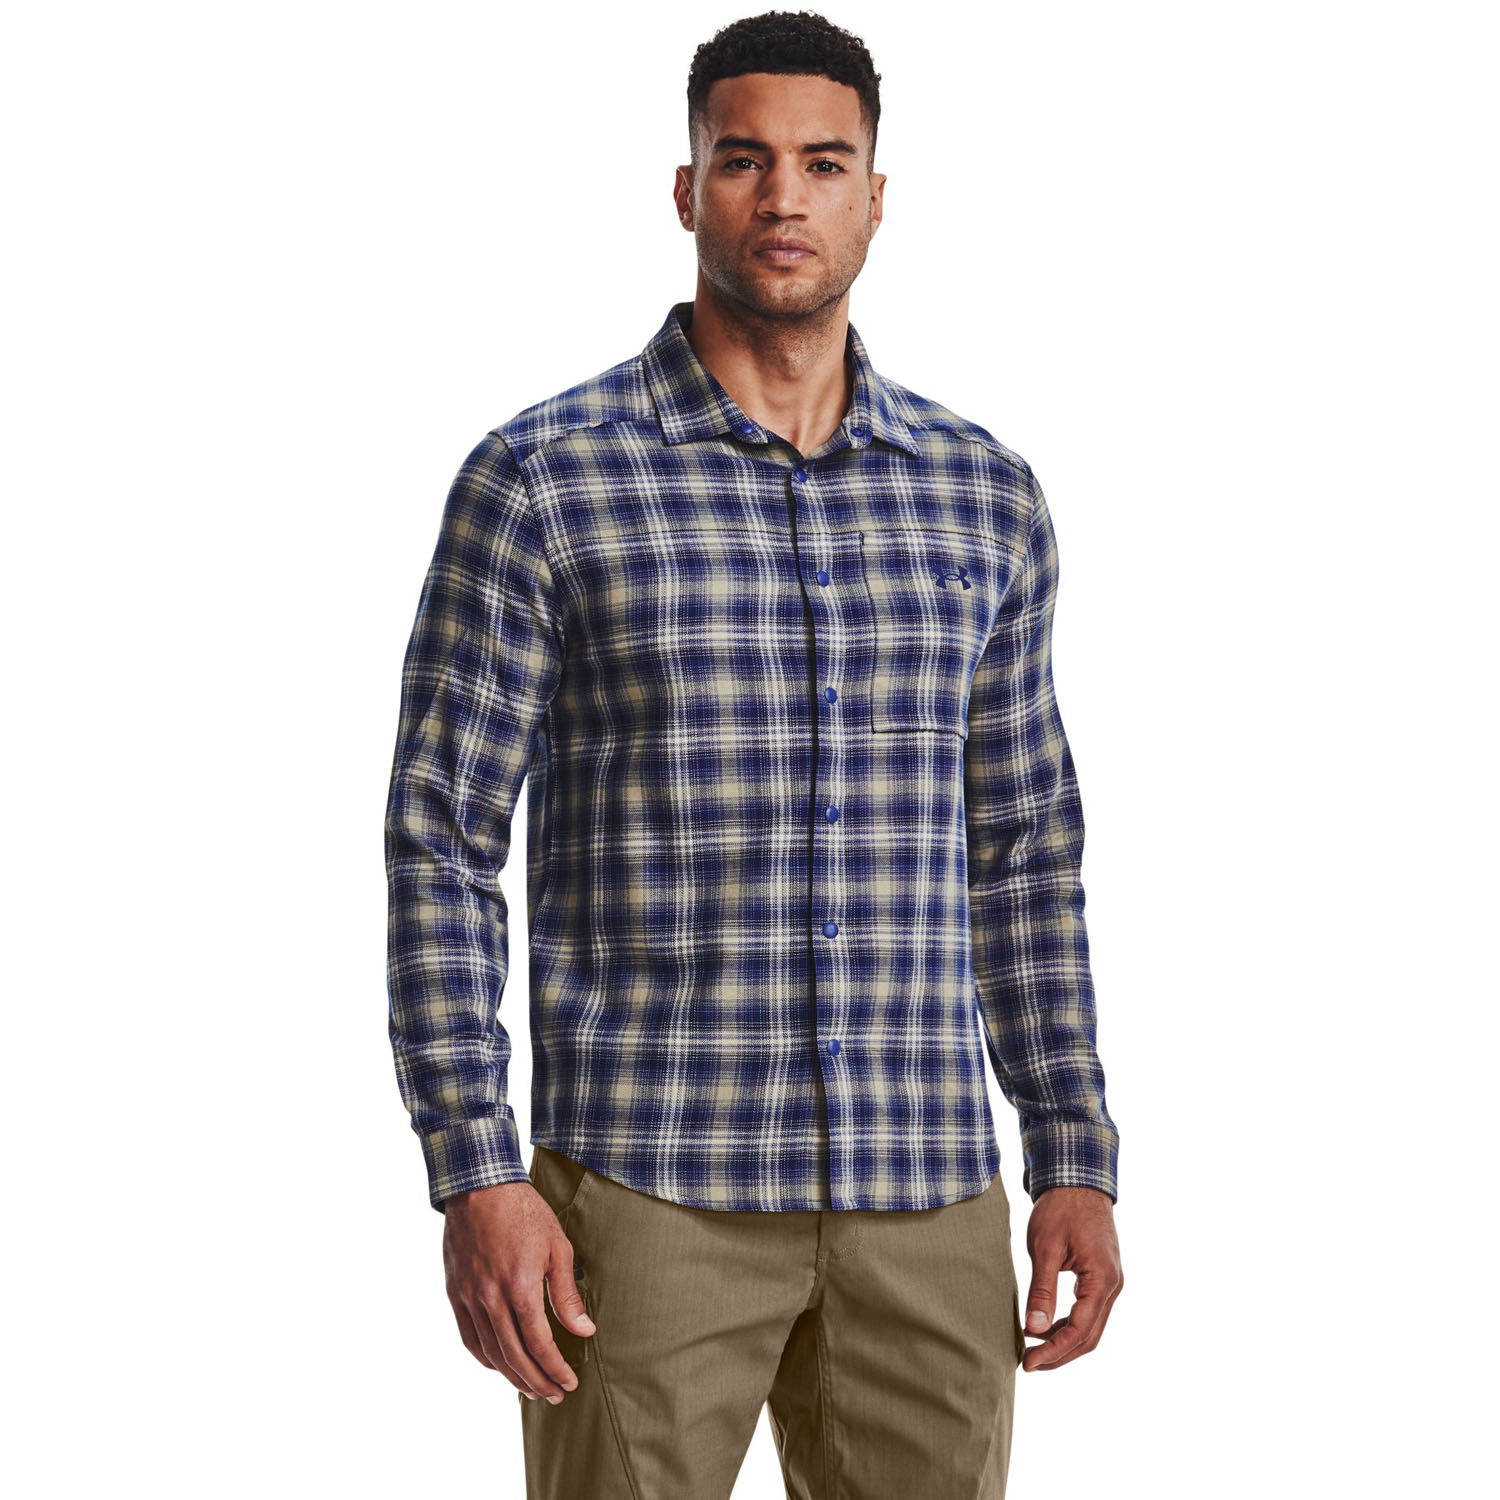 Under Armour - Mens Tradesman Flex Flannel Long-Sleeve T-Shirt